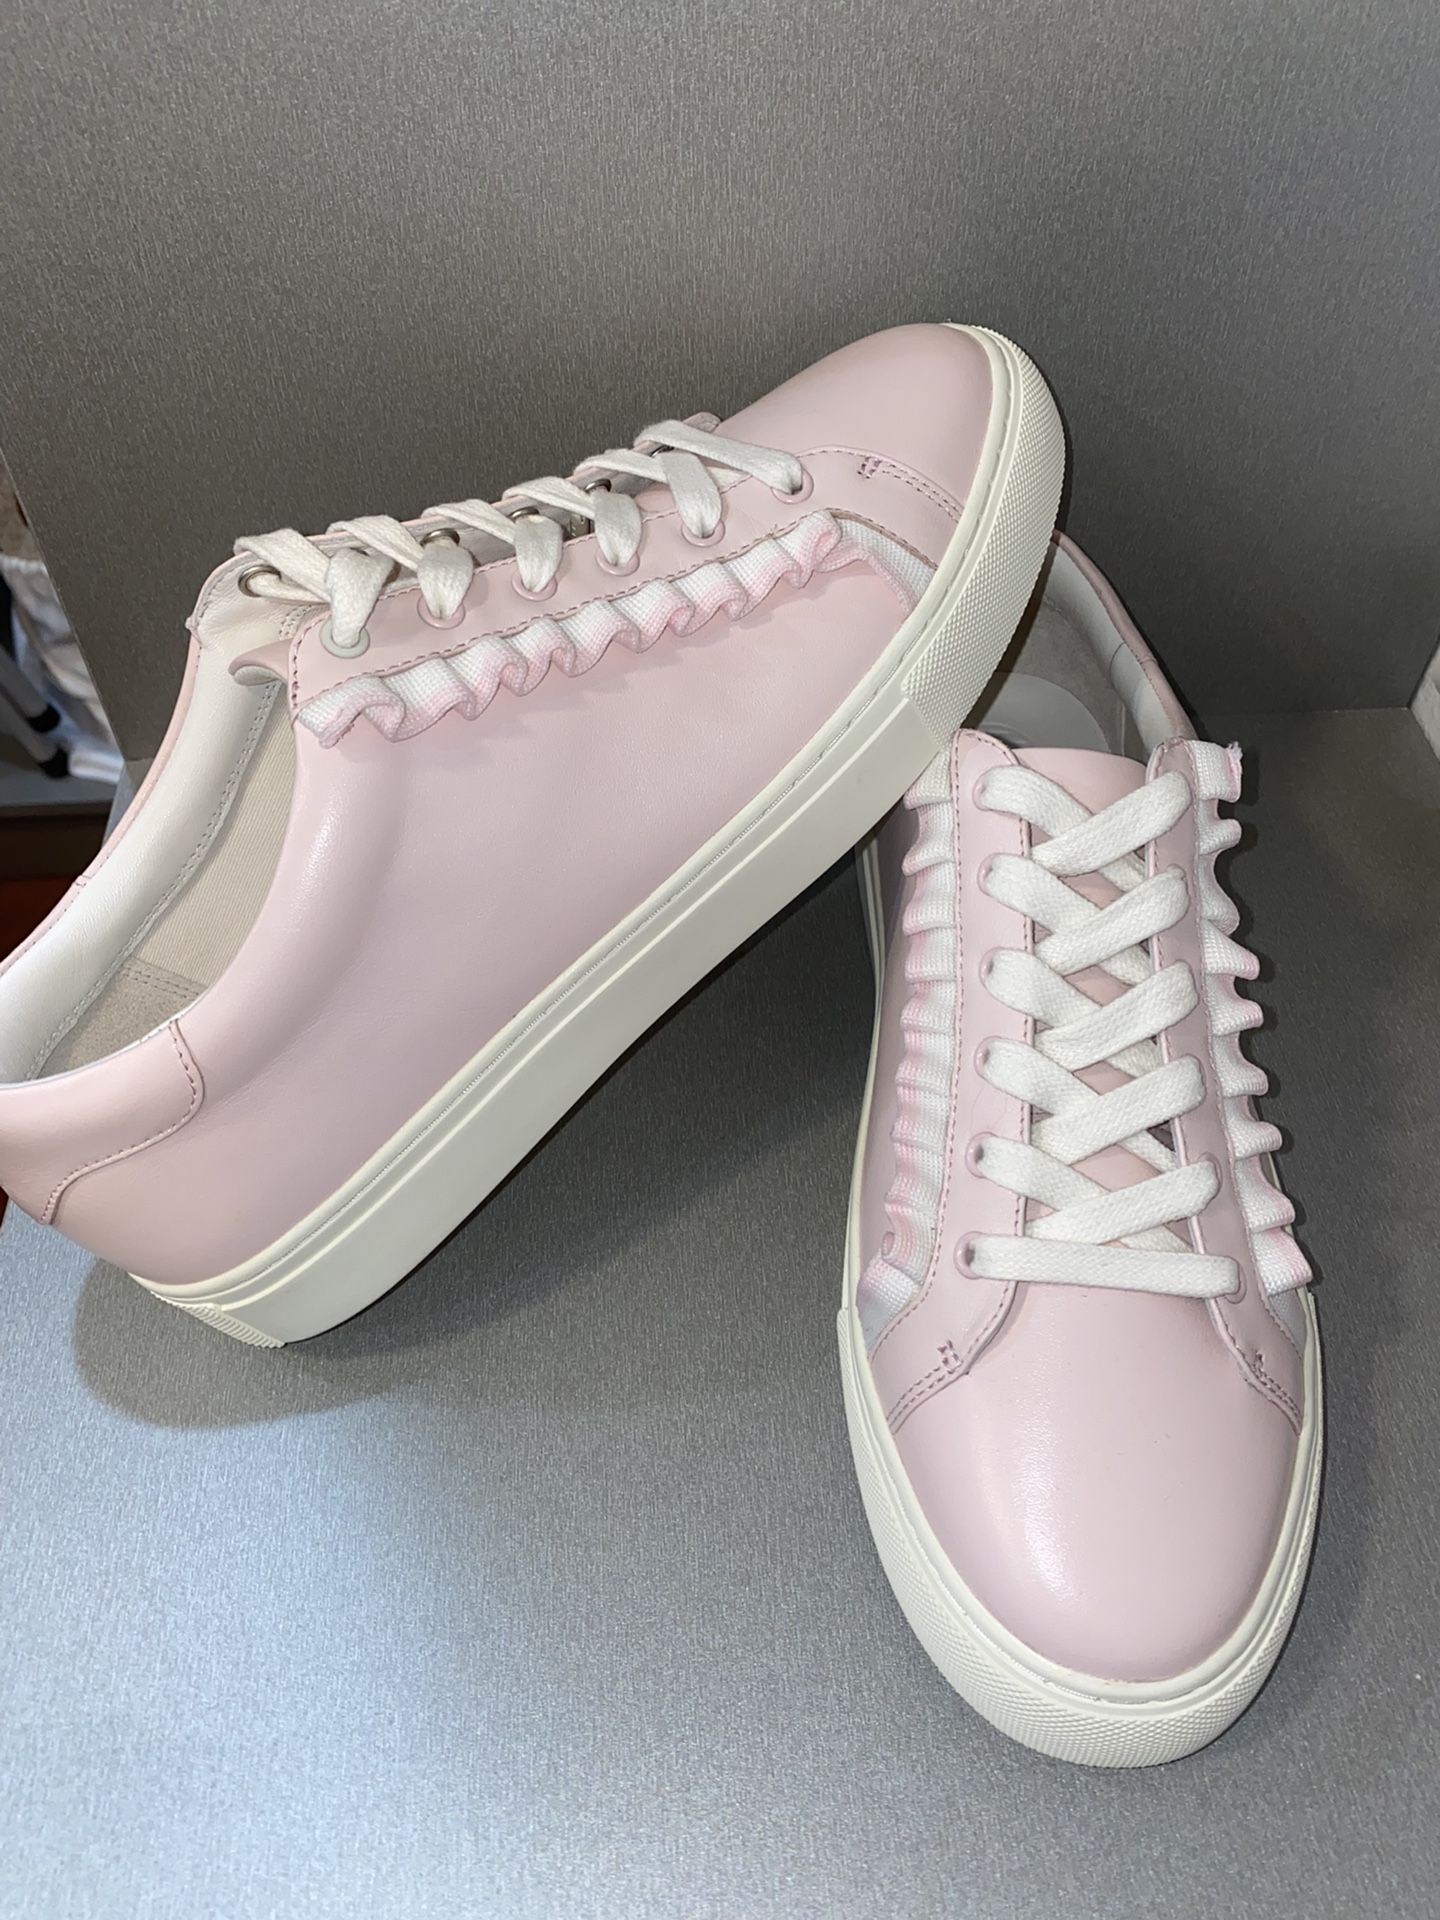 Women’s Size 10 1/2 Tory Burch Sneakers 